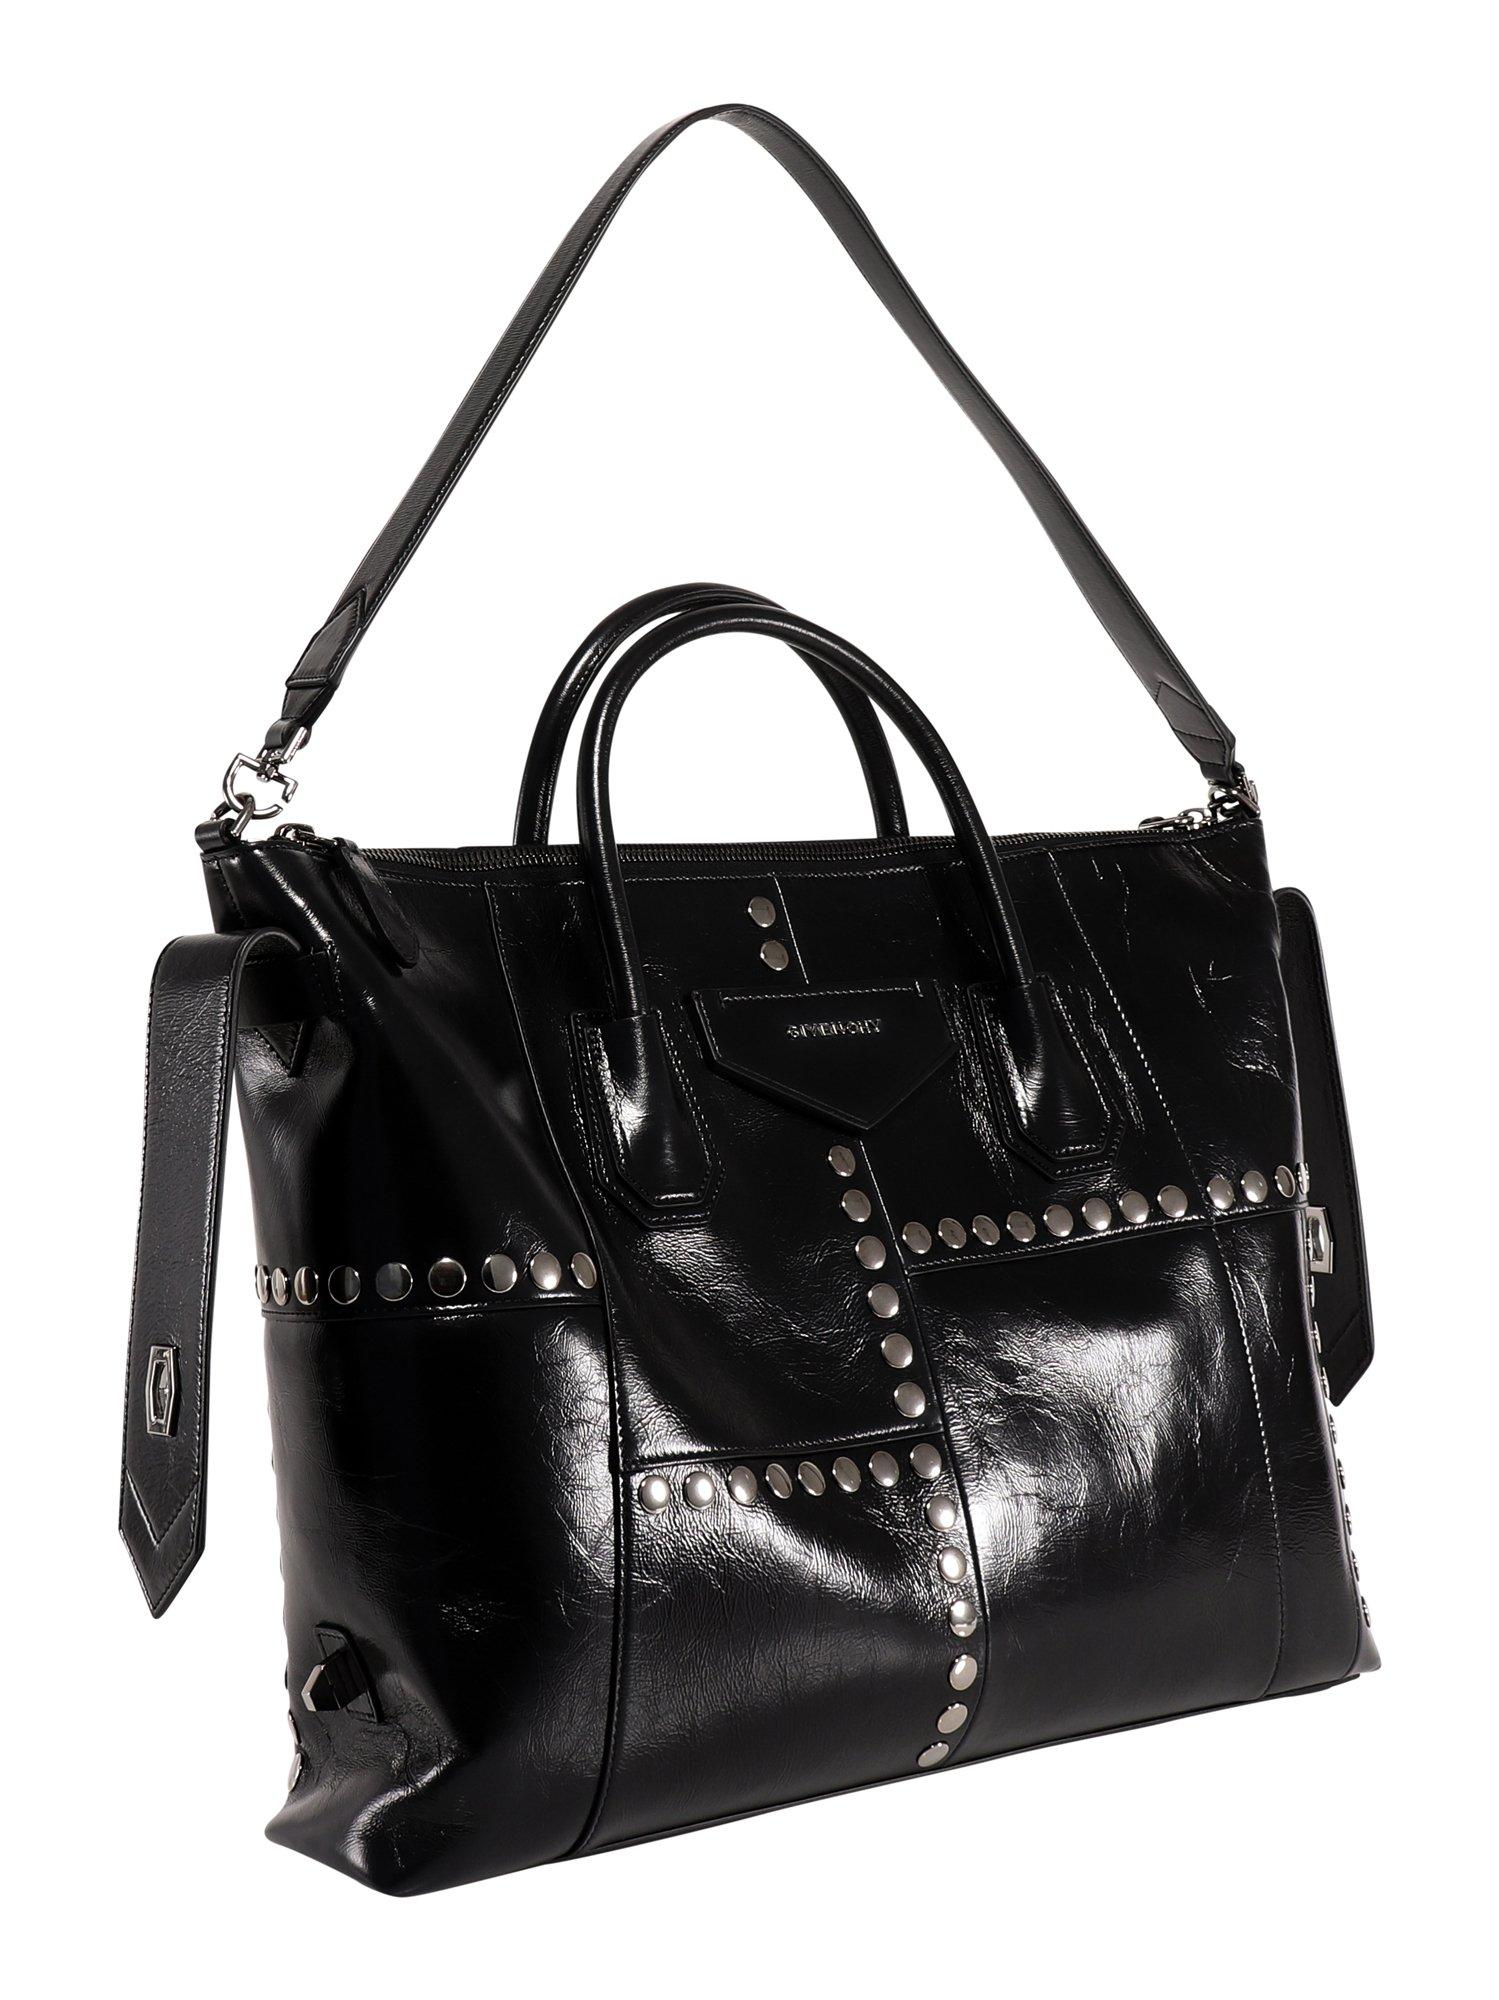 Givenchy Antigona Soft Medium Leather Tote - Navy